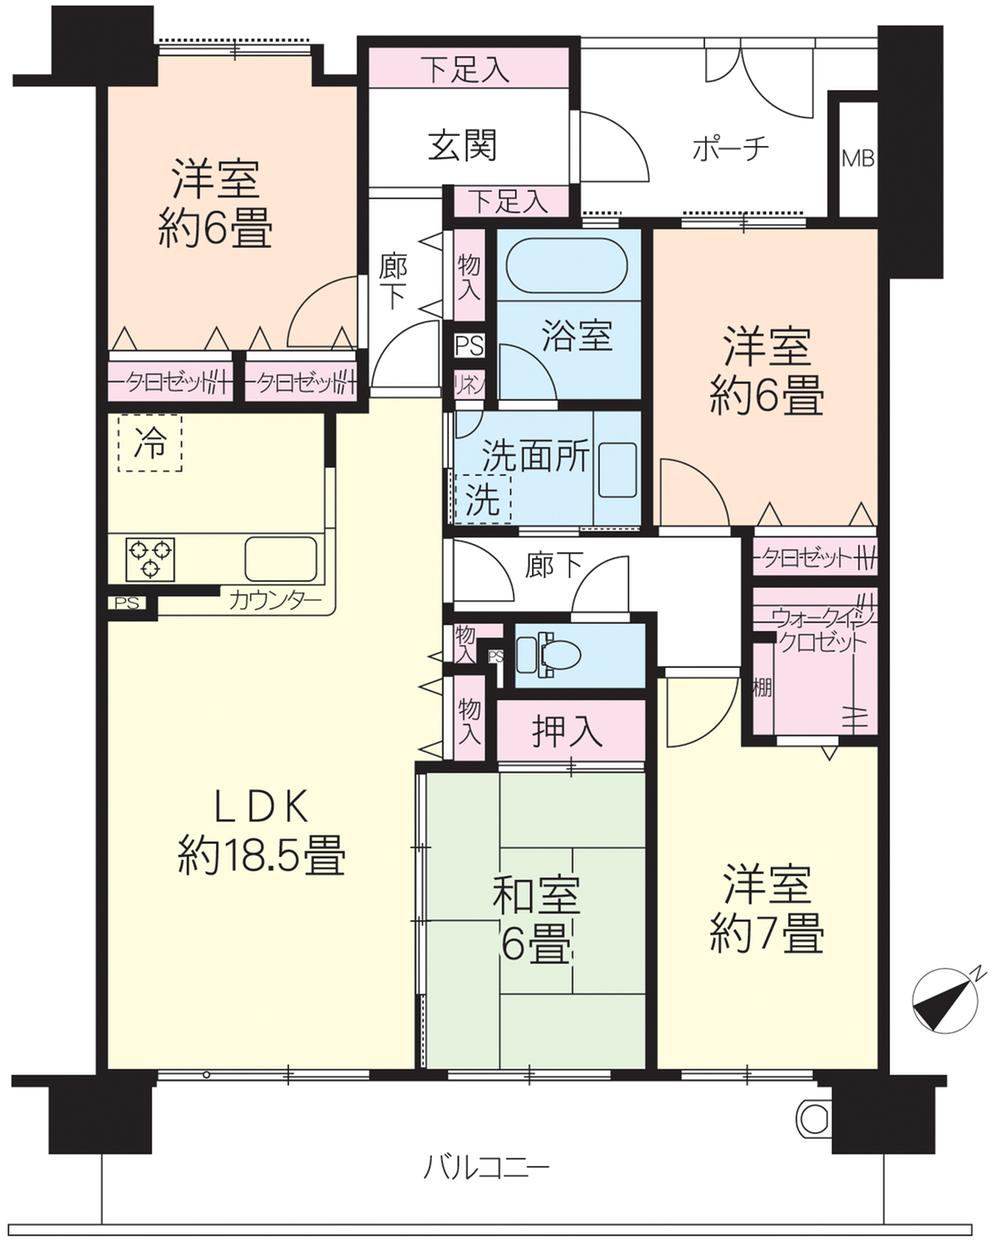 Floor plan. 4LDK, Price 26 million yen, Footprint 100.08 sq m , Balcony area 15.7 sq m